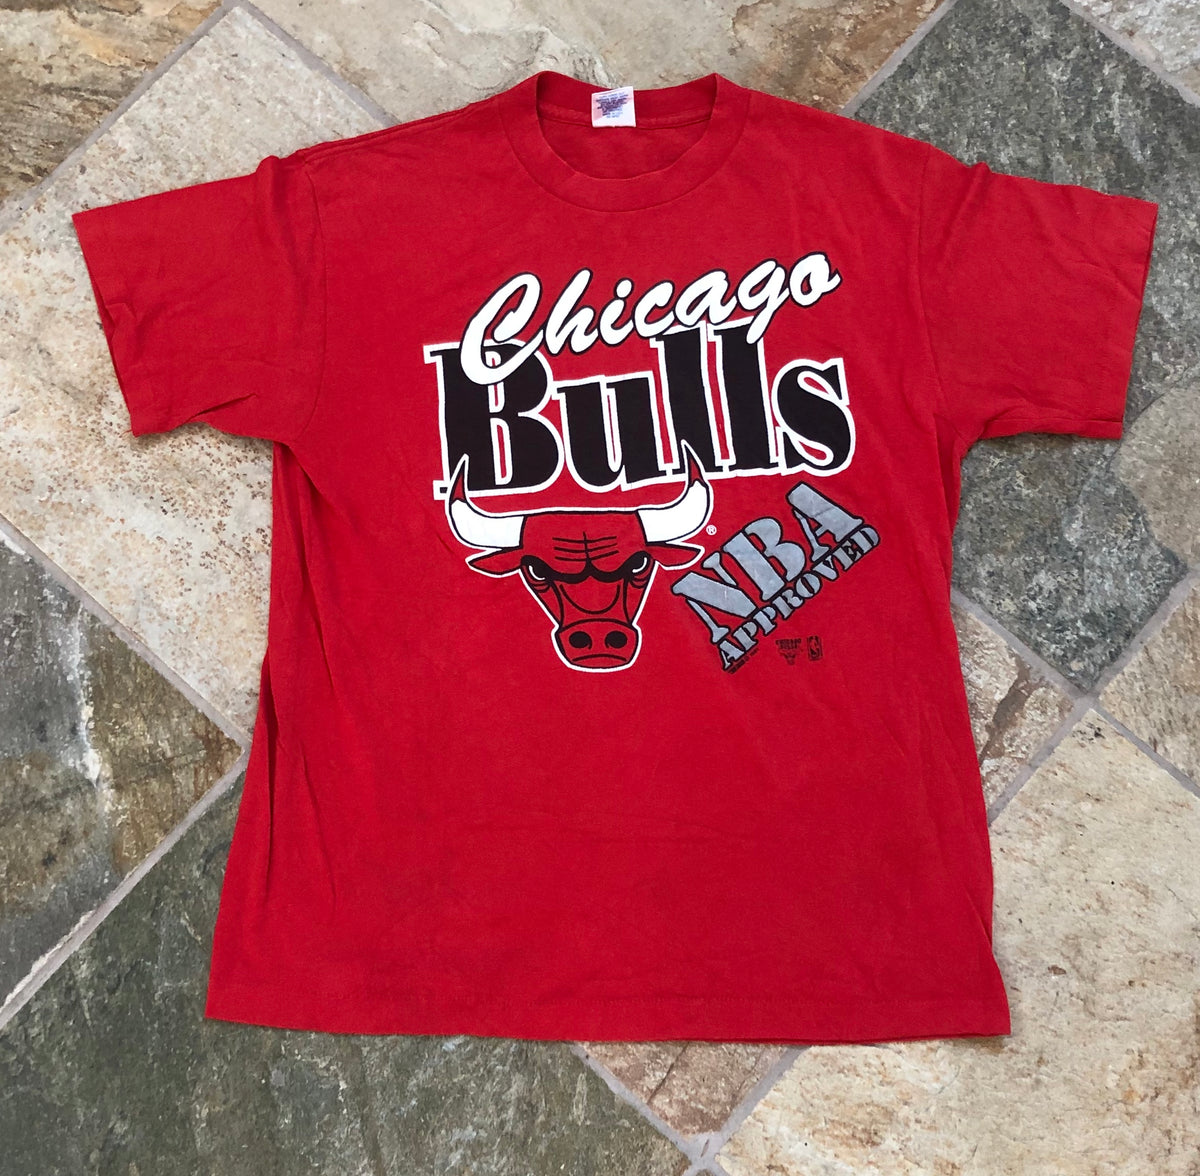 90s bulls t shirt